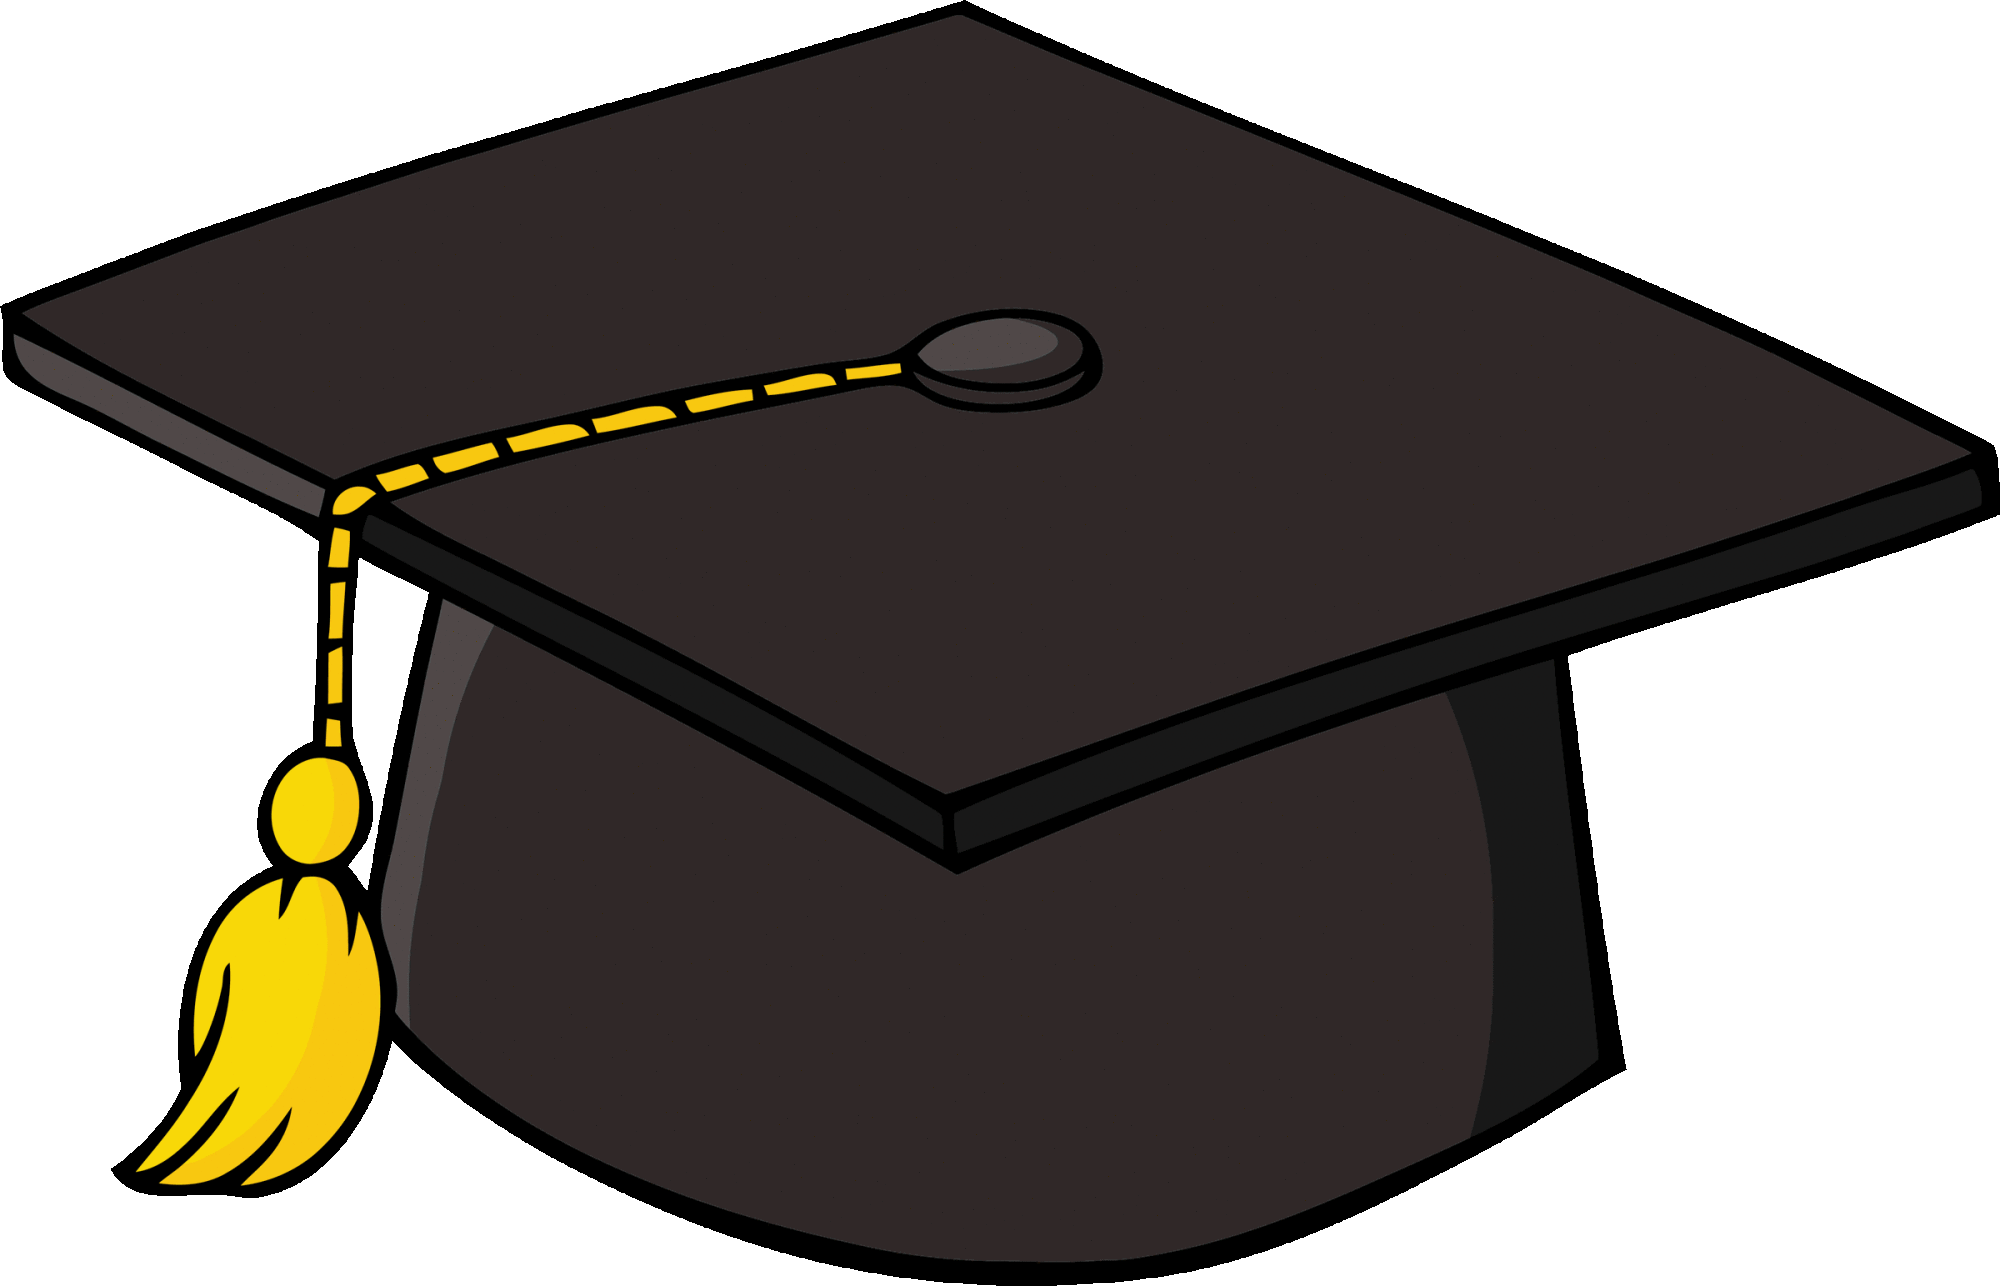 Graduate clipart confused. Diploma jokingart com hat